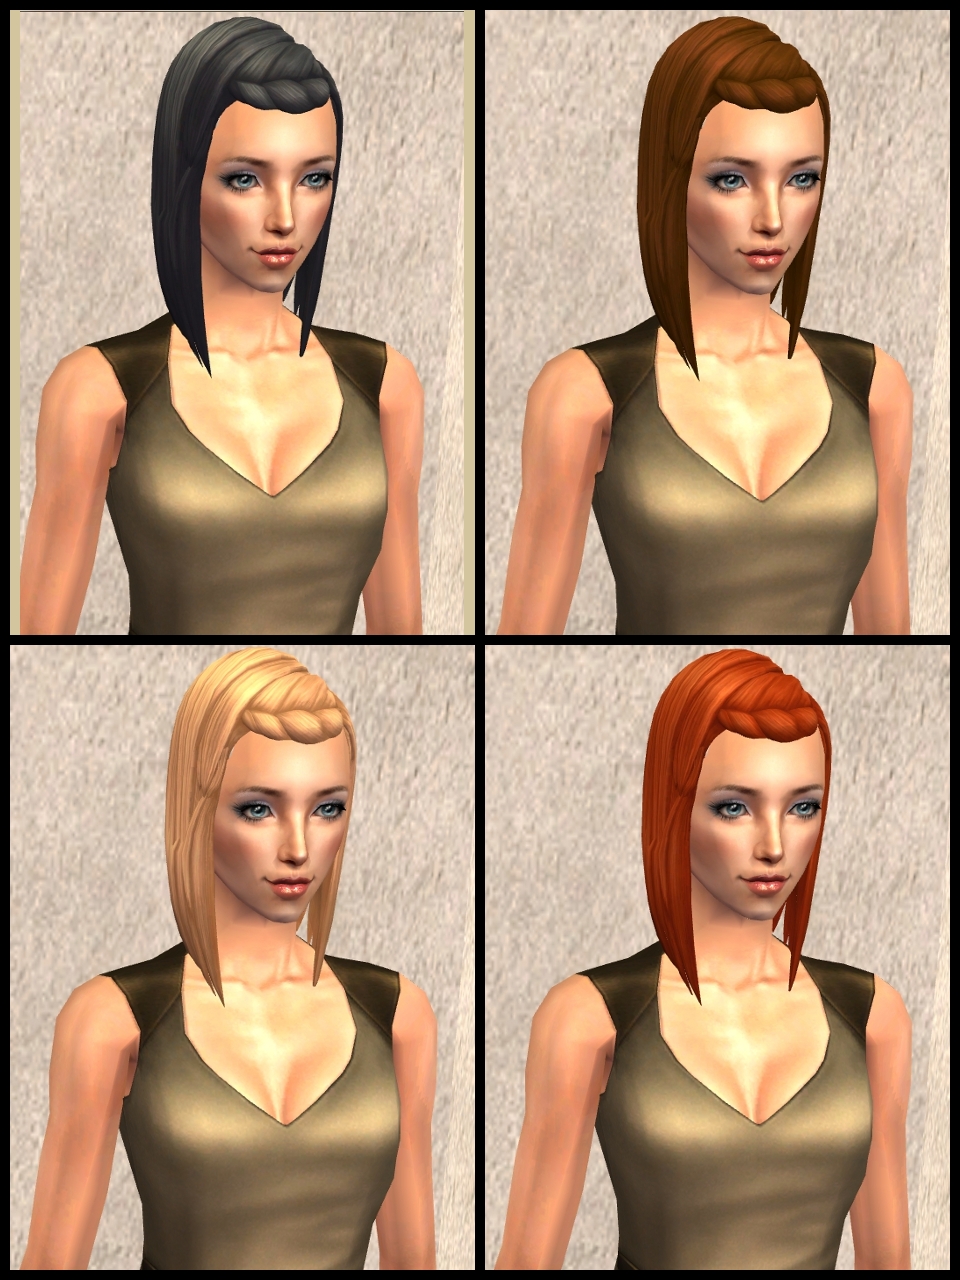 Body Shop | The Sims Wiki | Fandom